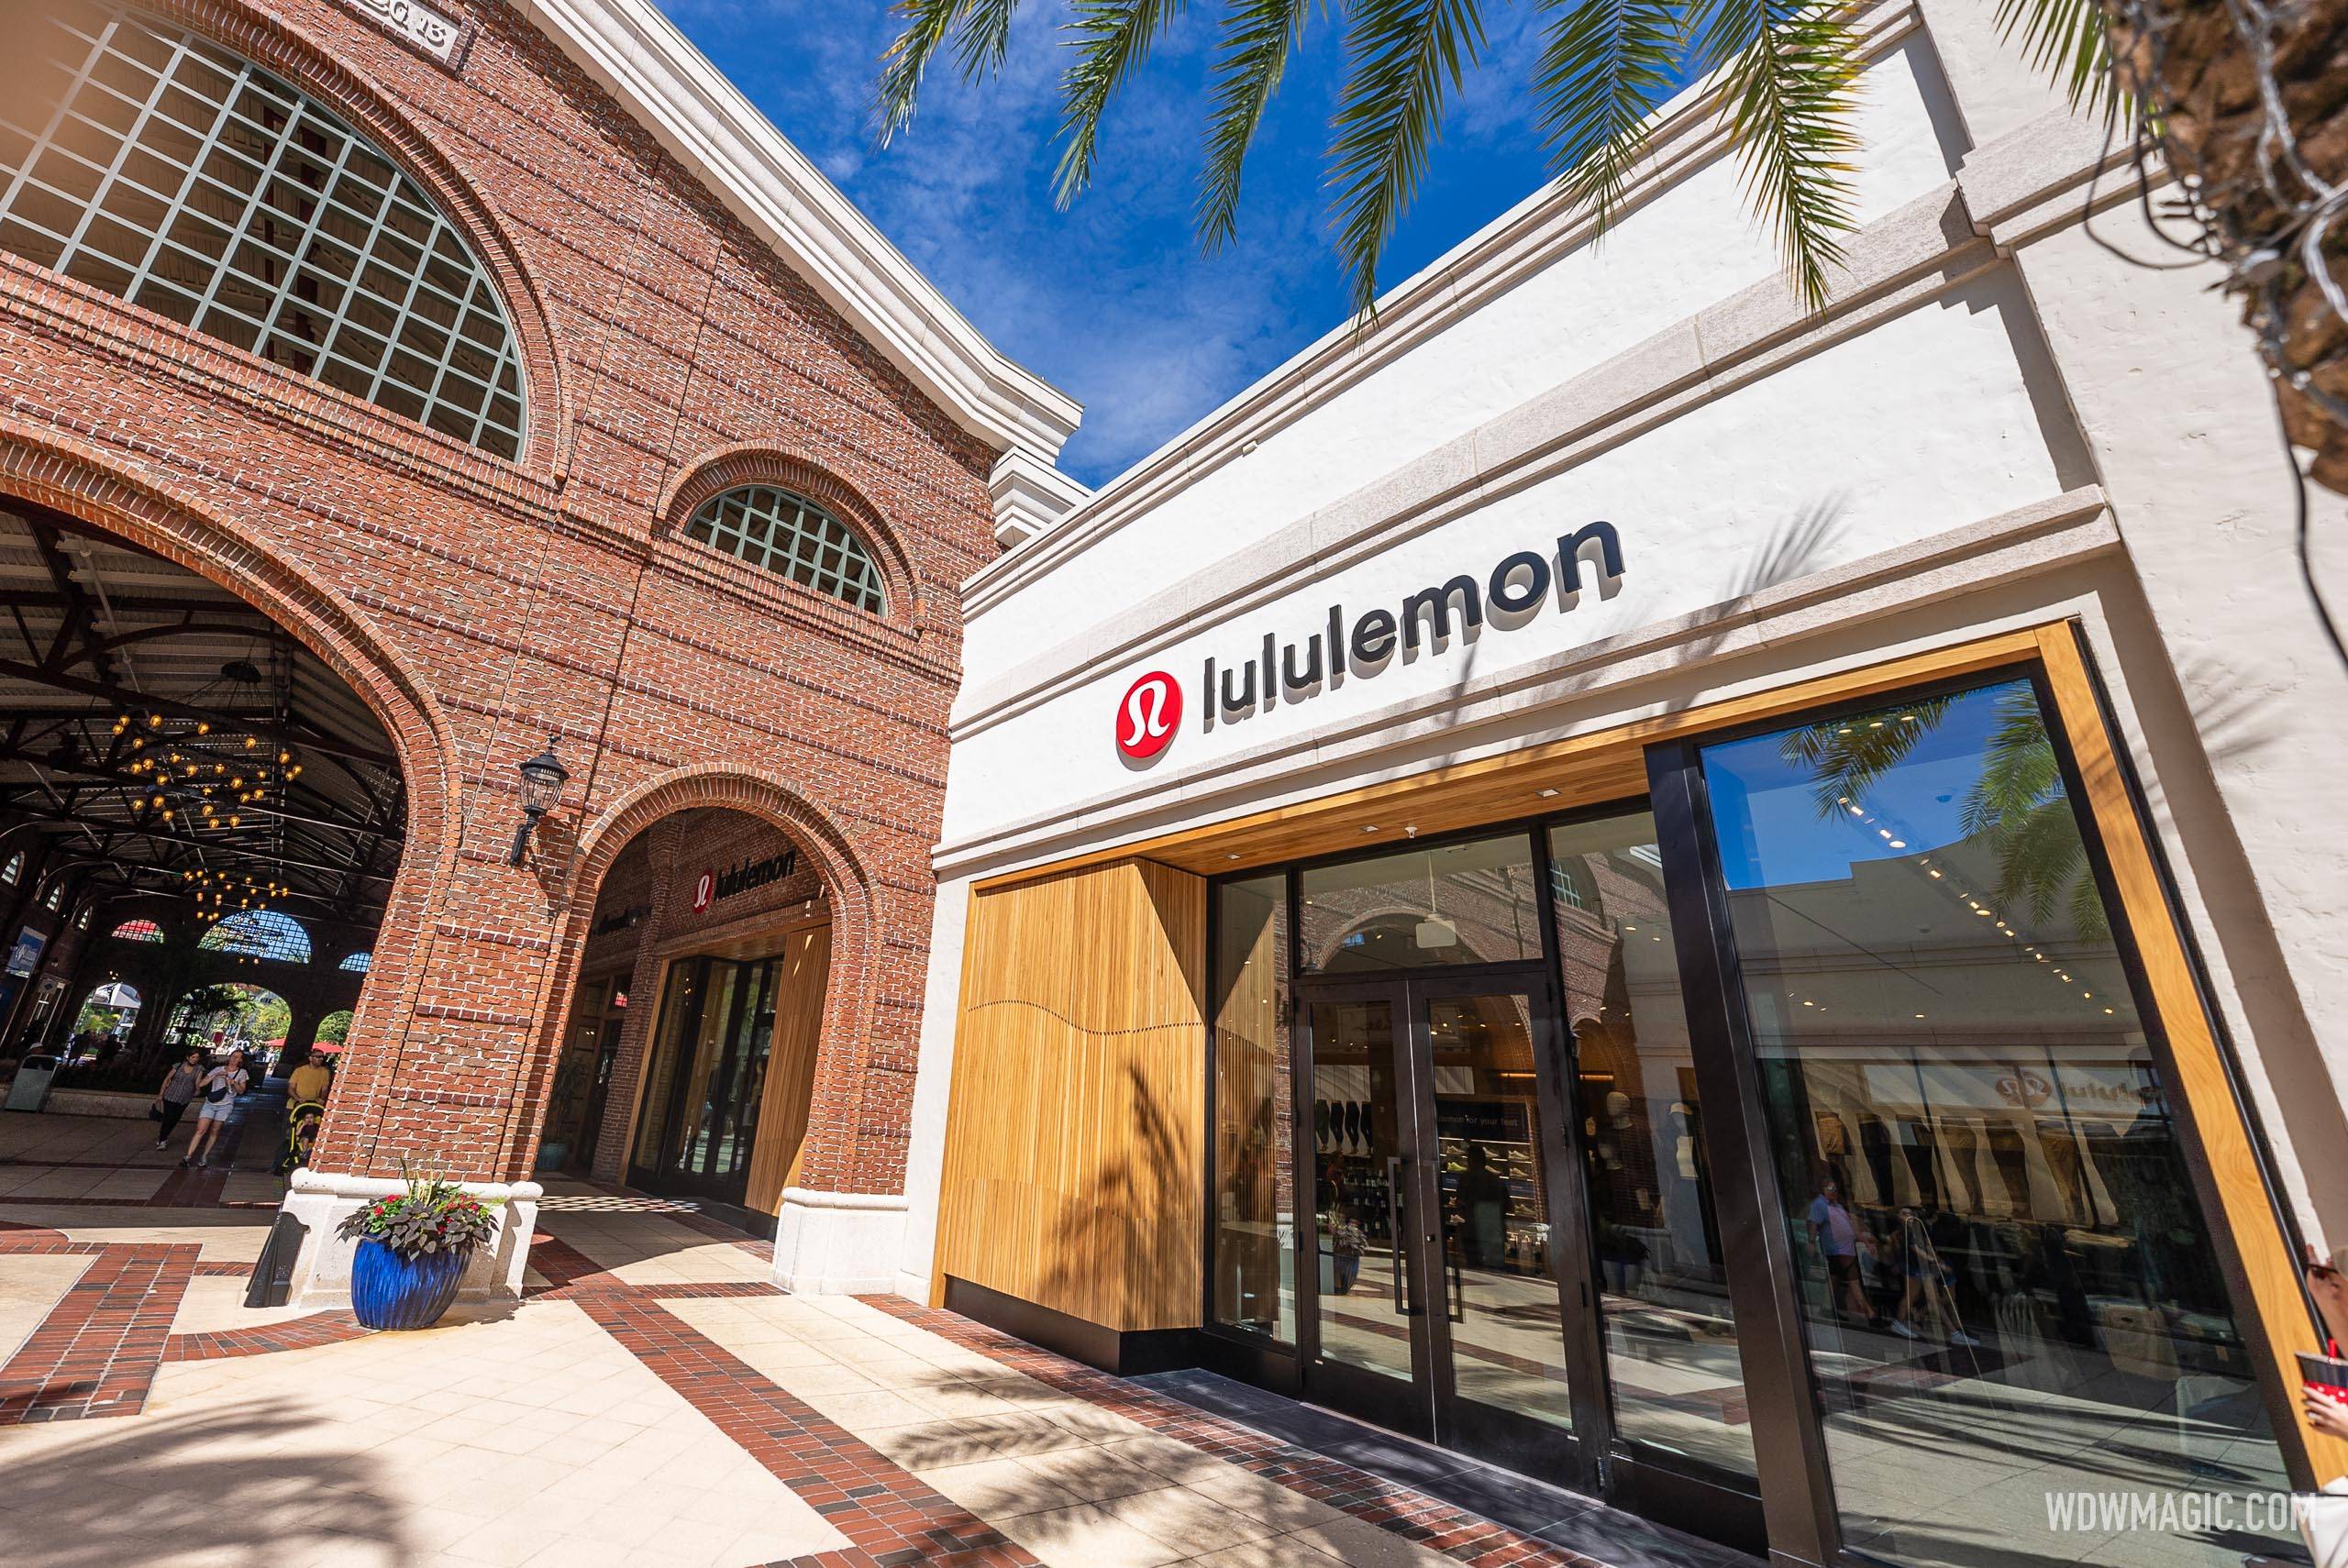 Lululemon opens in new larger location at Disney Springs in Walt Disney World